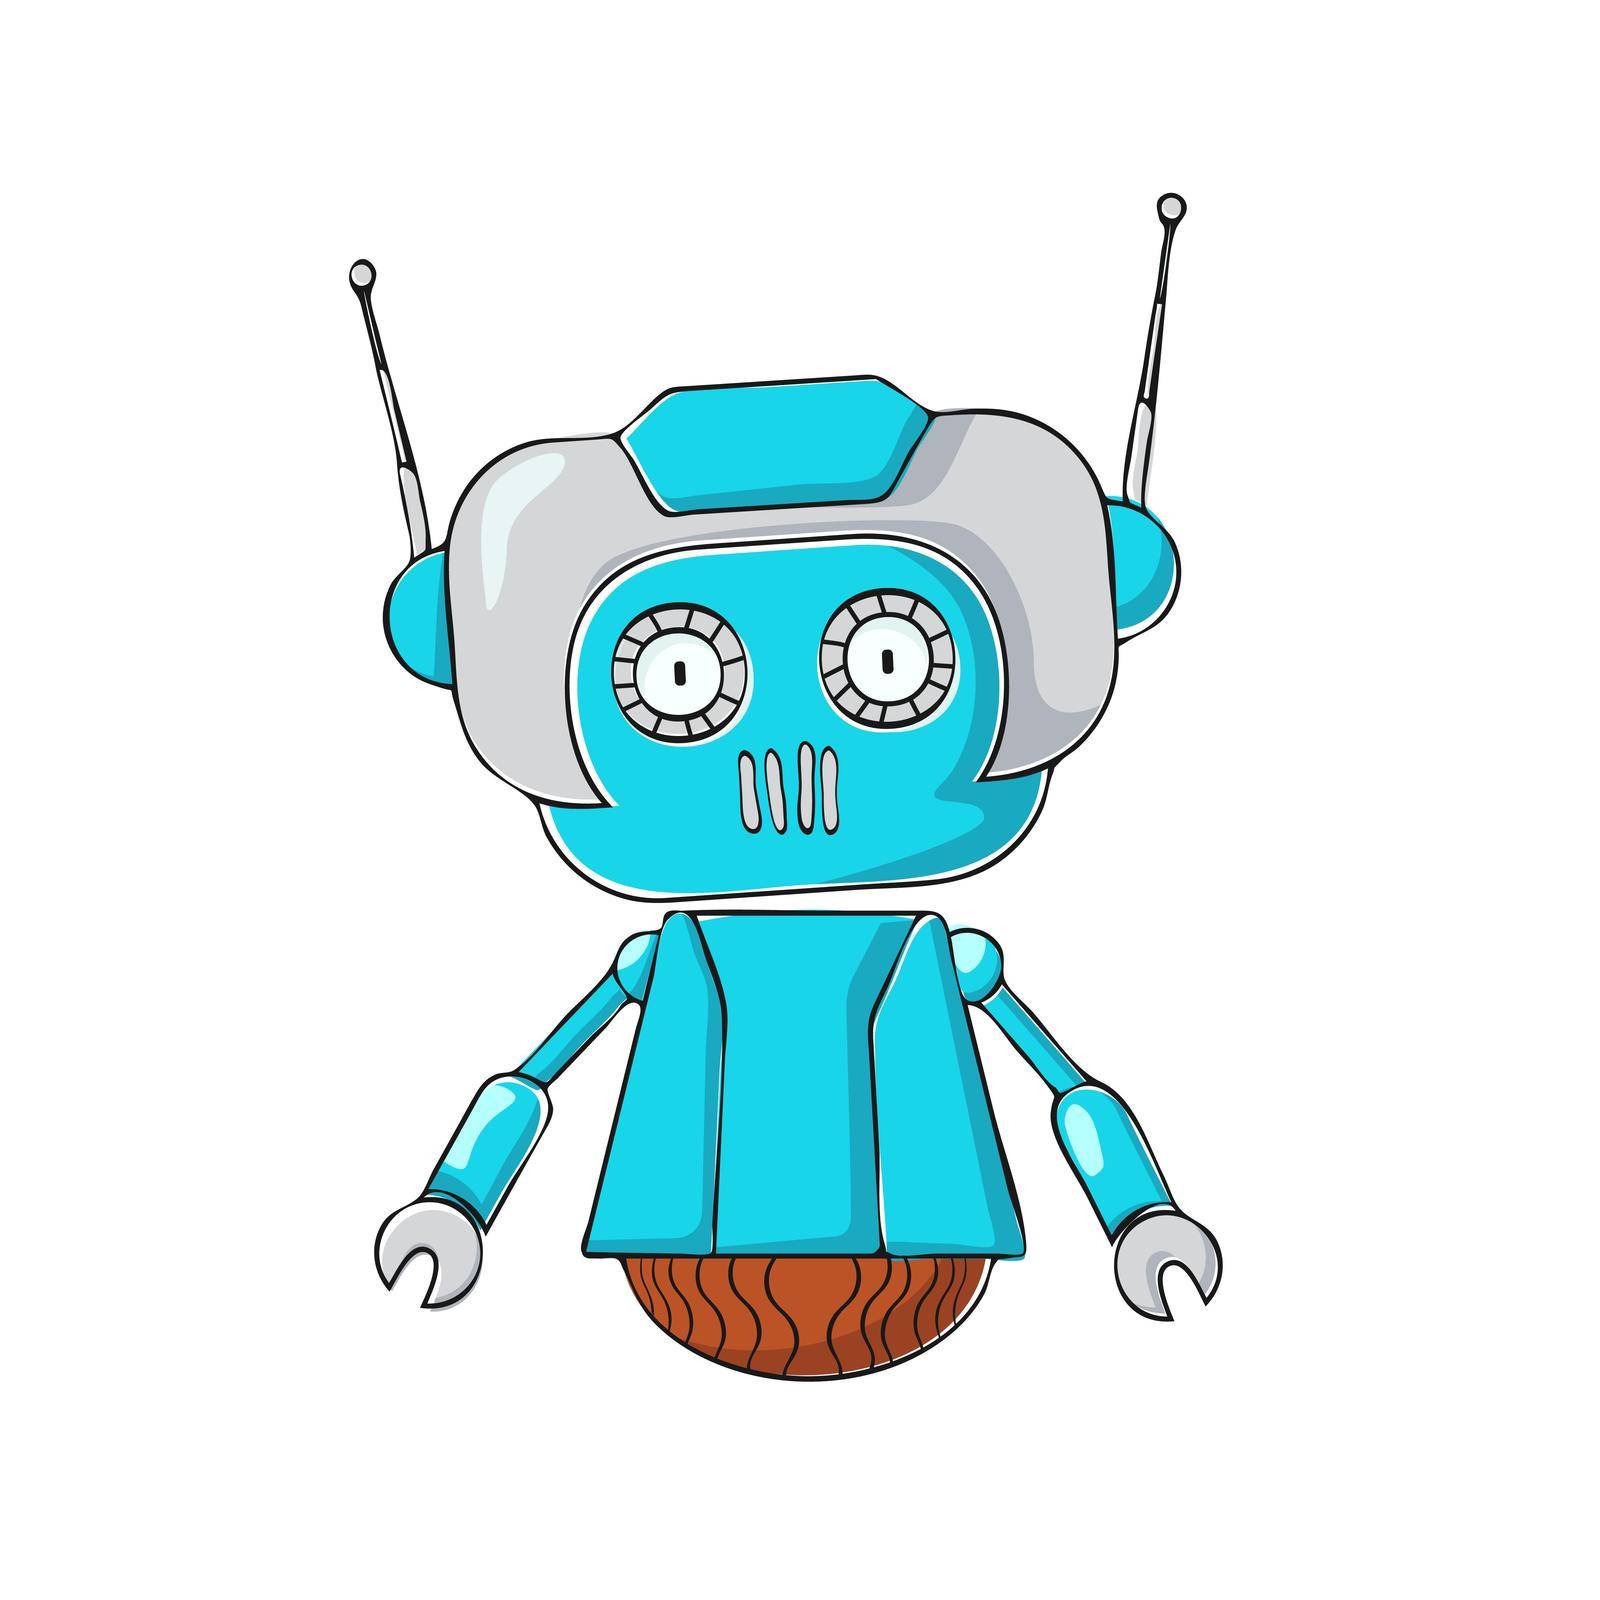 Little bot by Lirch